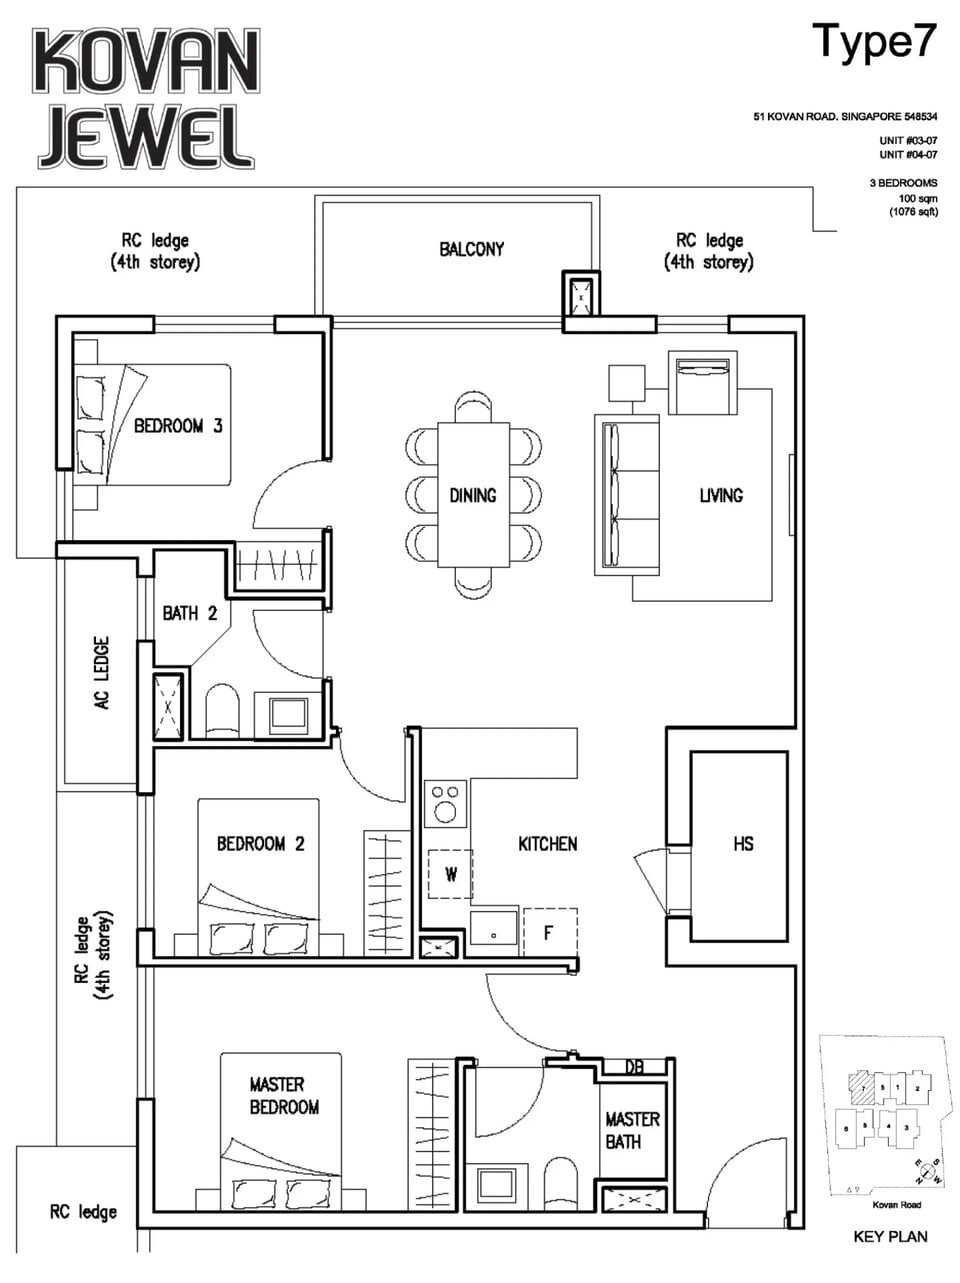 fp-kovan-jewel-family-7-floor-plan.jpg